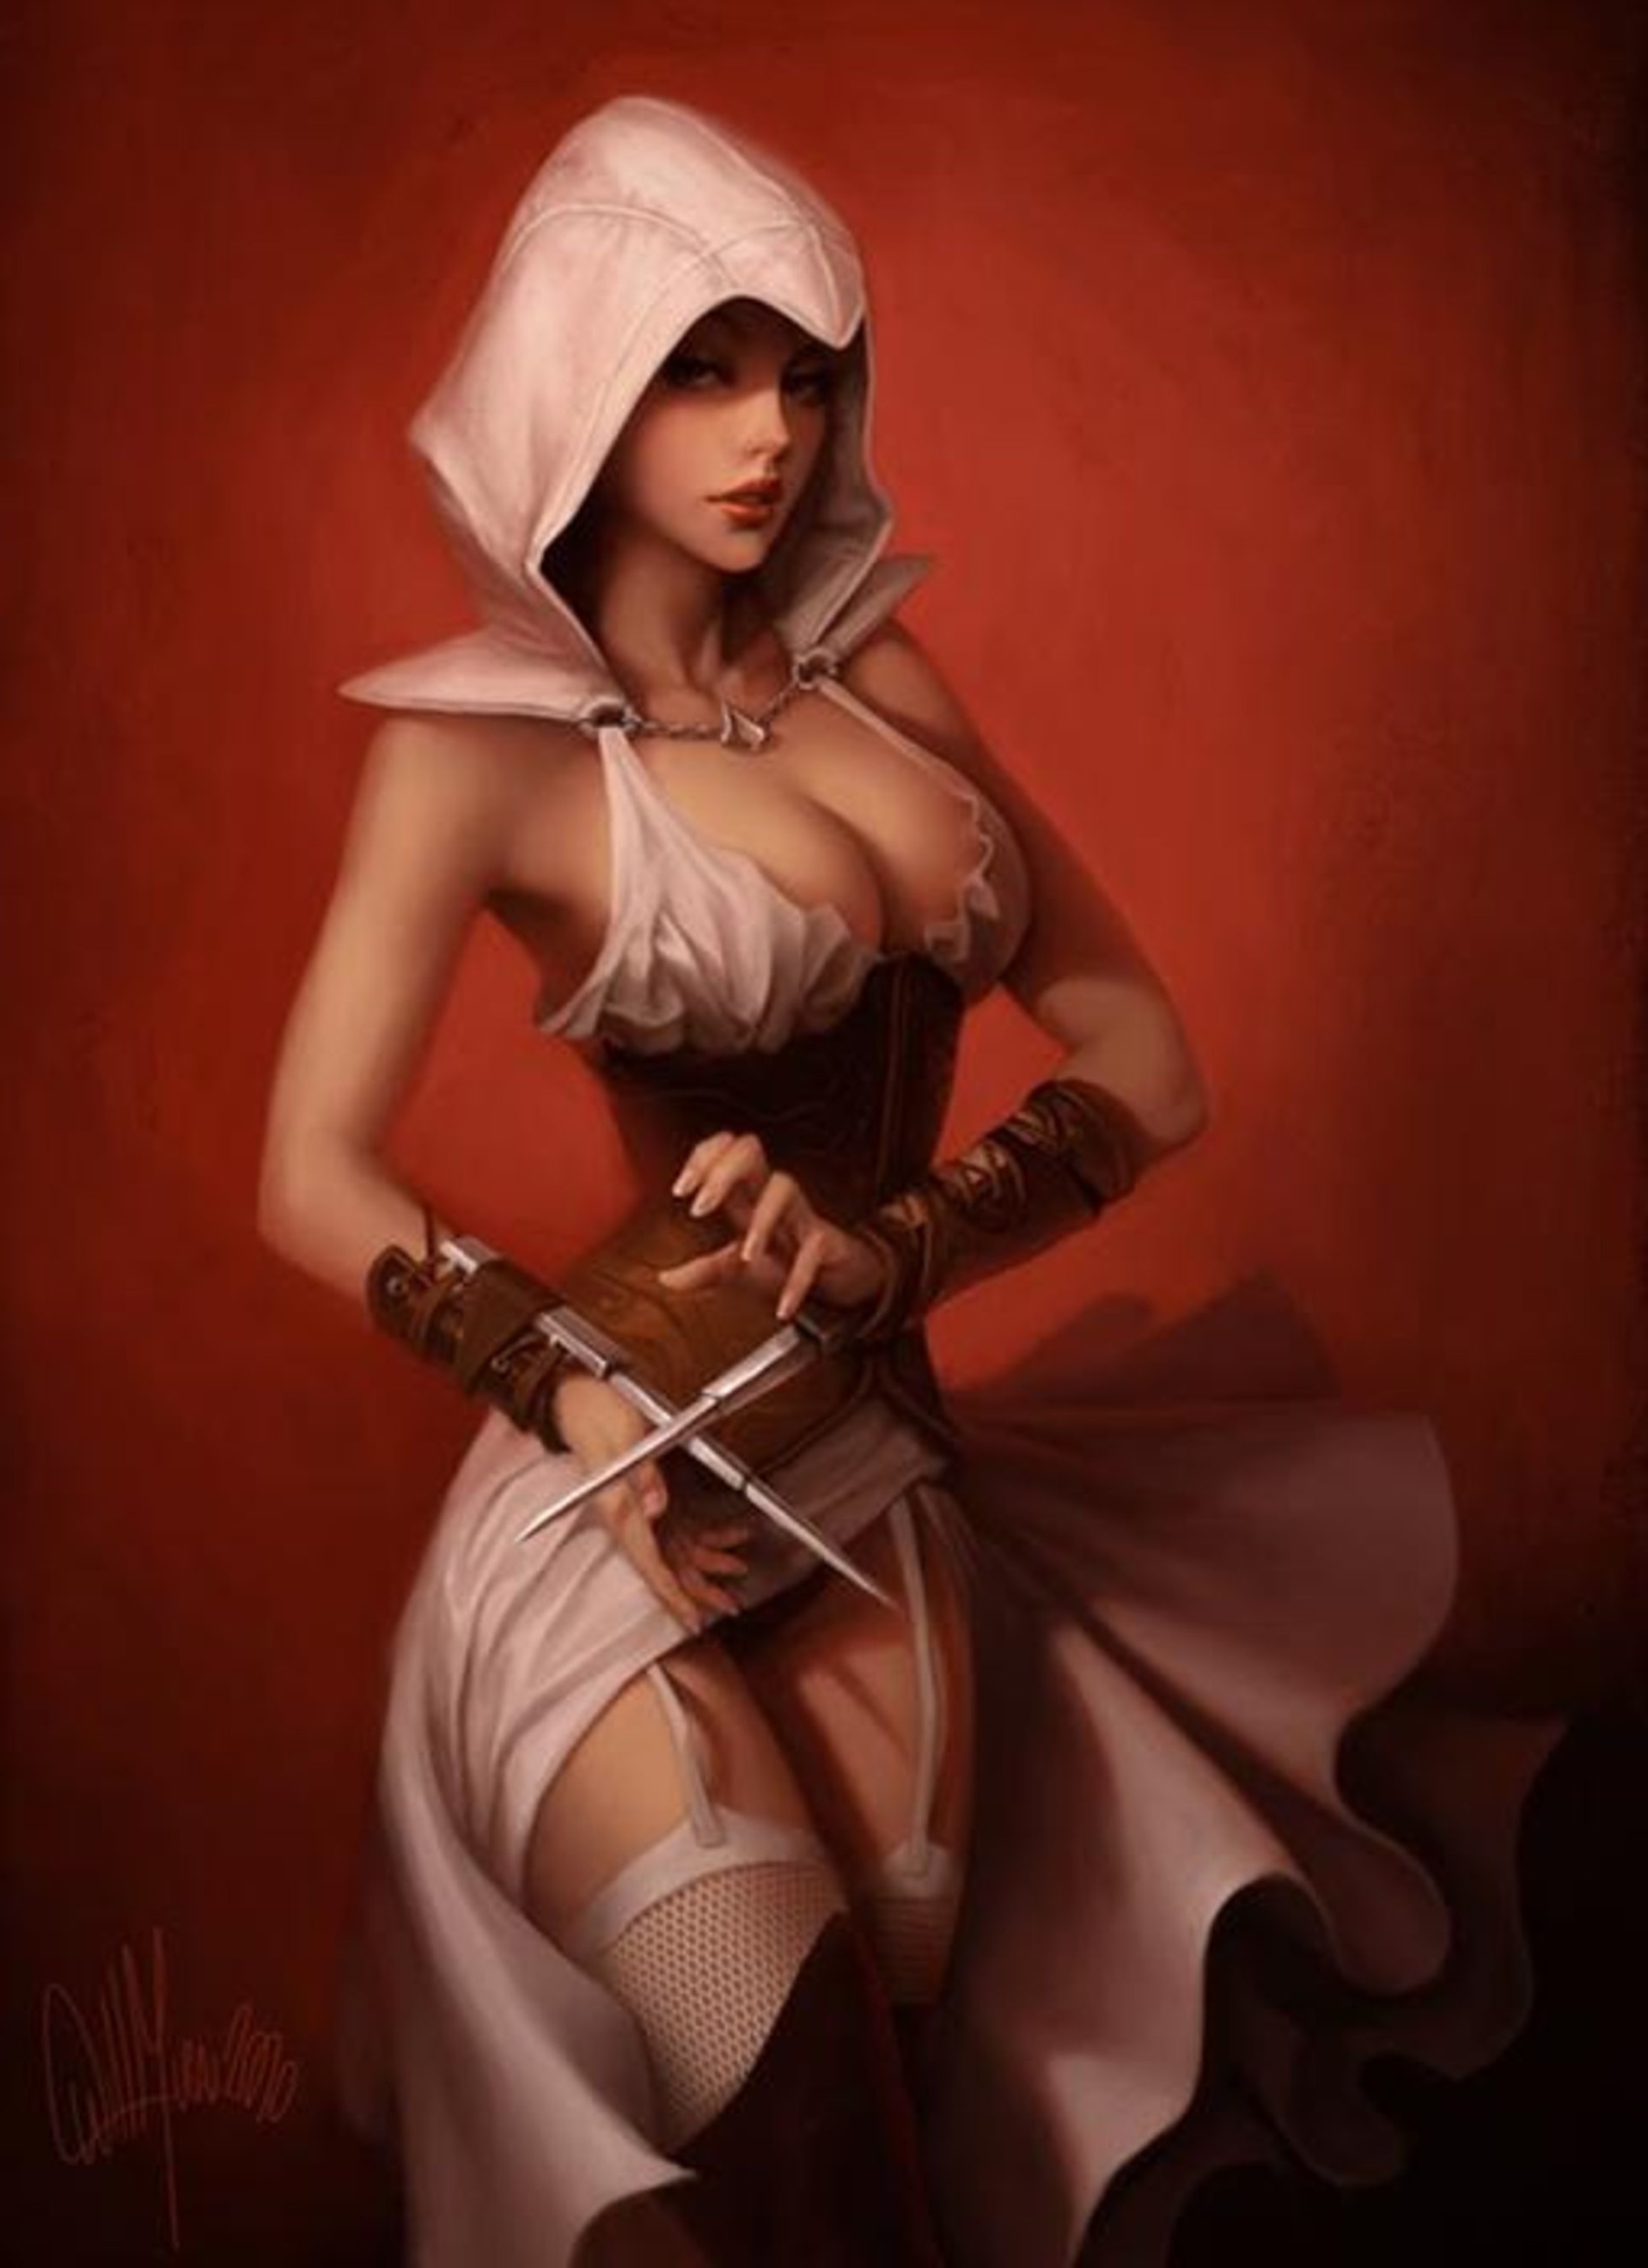 Assassin's creed brotherhood girl naked adult scenes